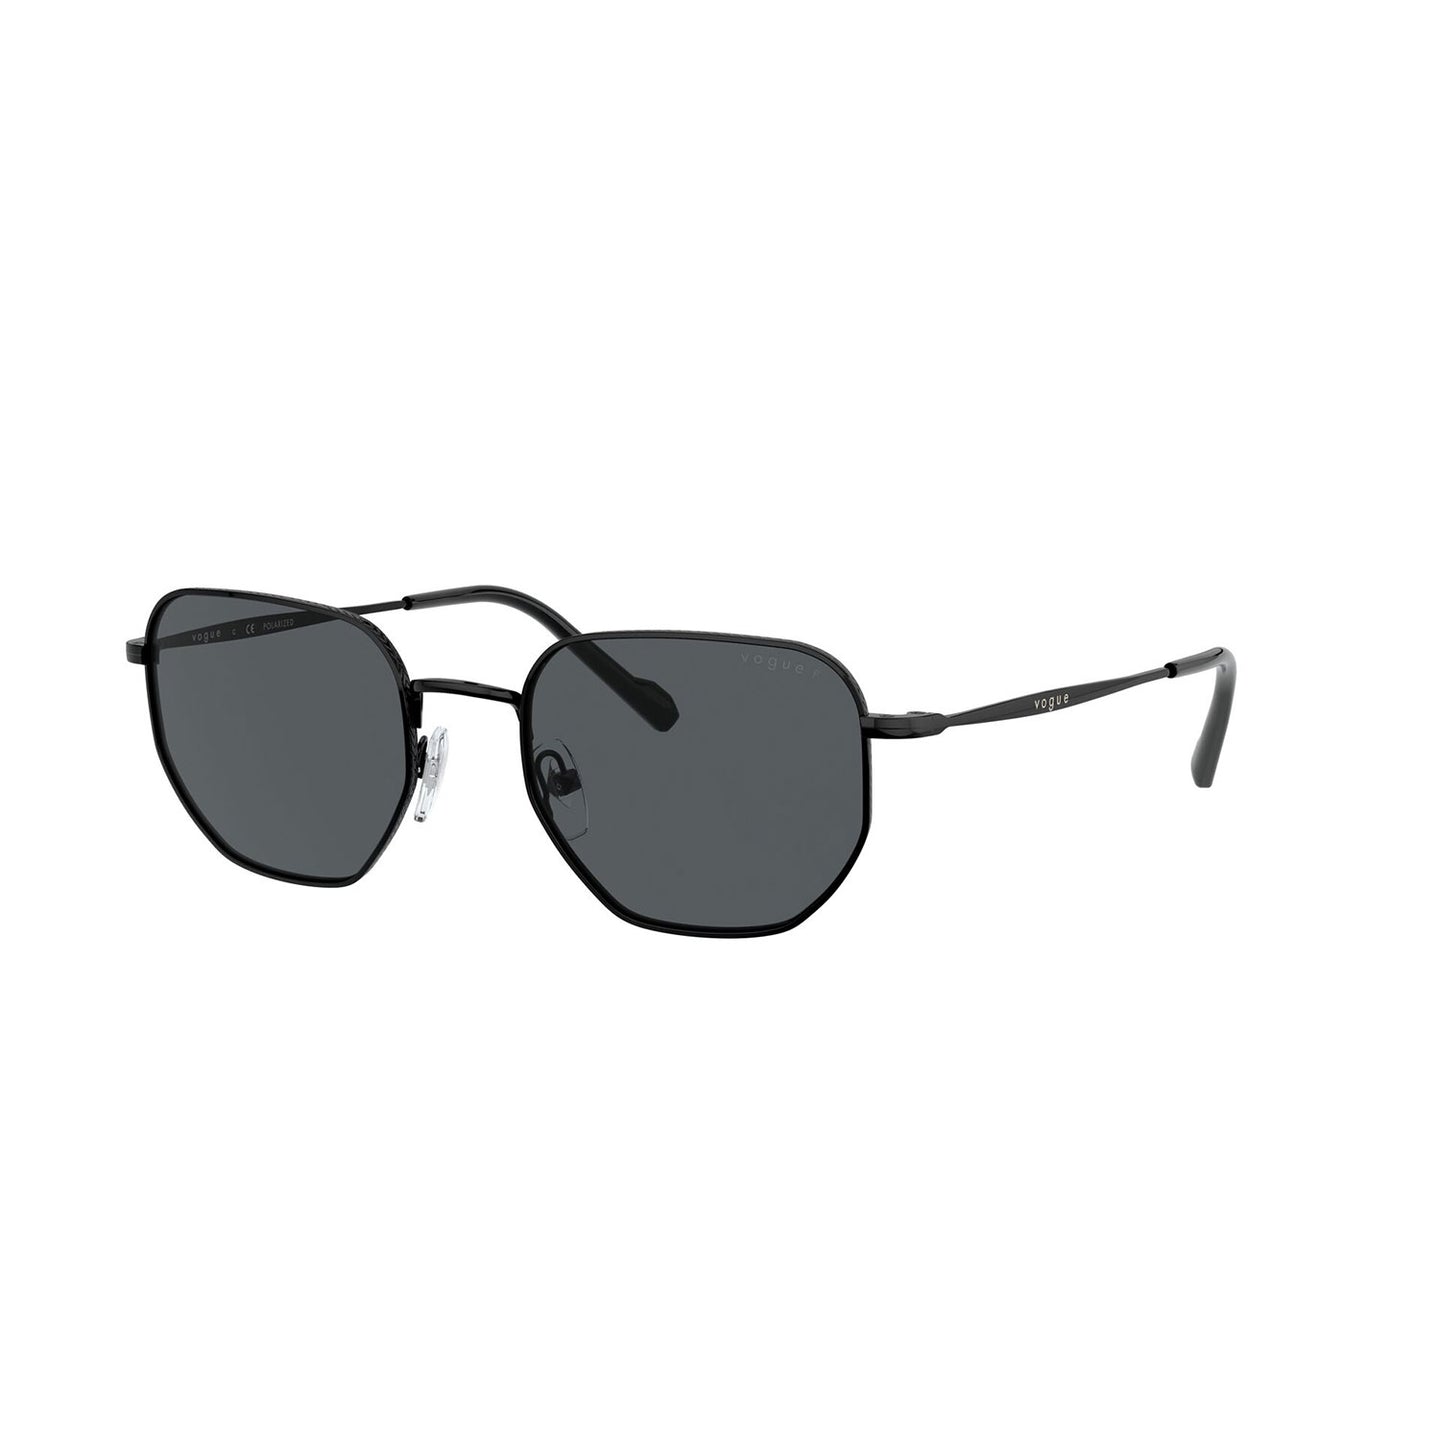 sunglasses vogue vo 4186s color 352/81 black 